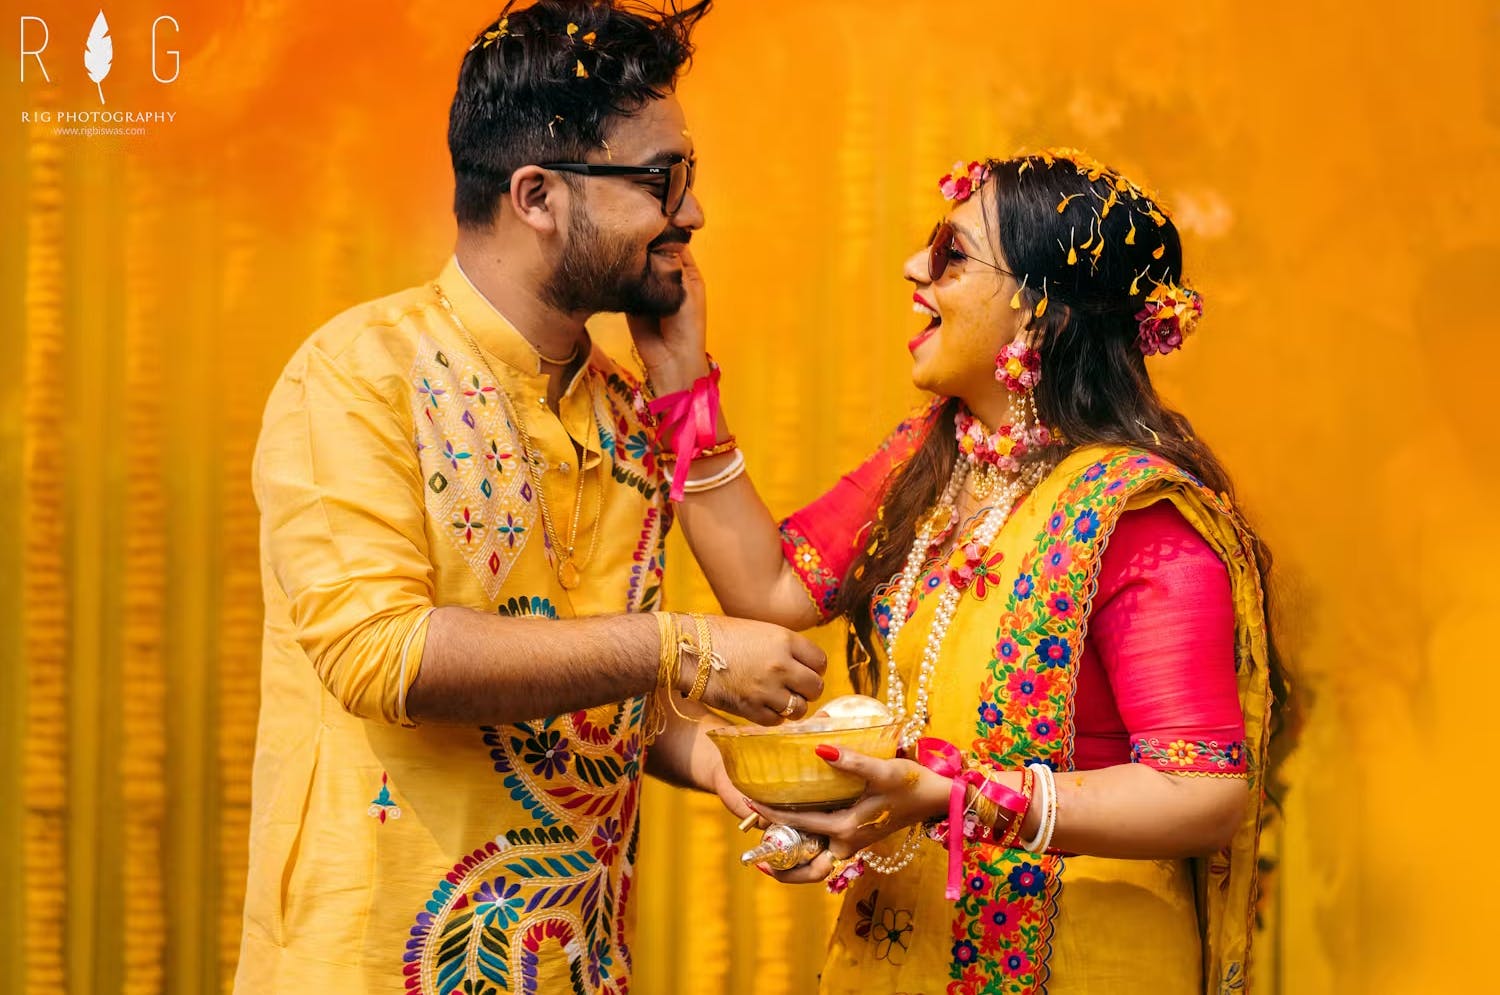 Wedding couple celebrating their Haldi ceremony